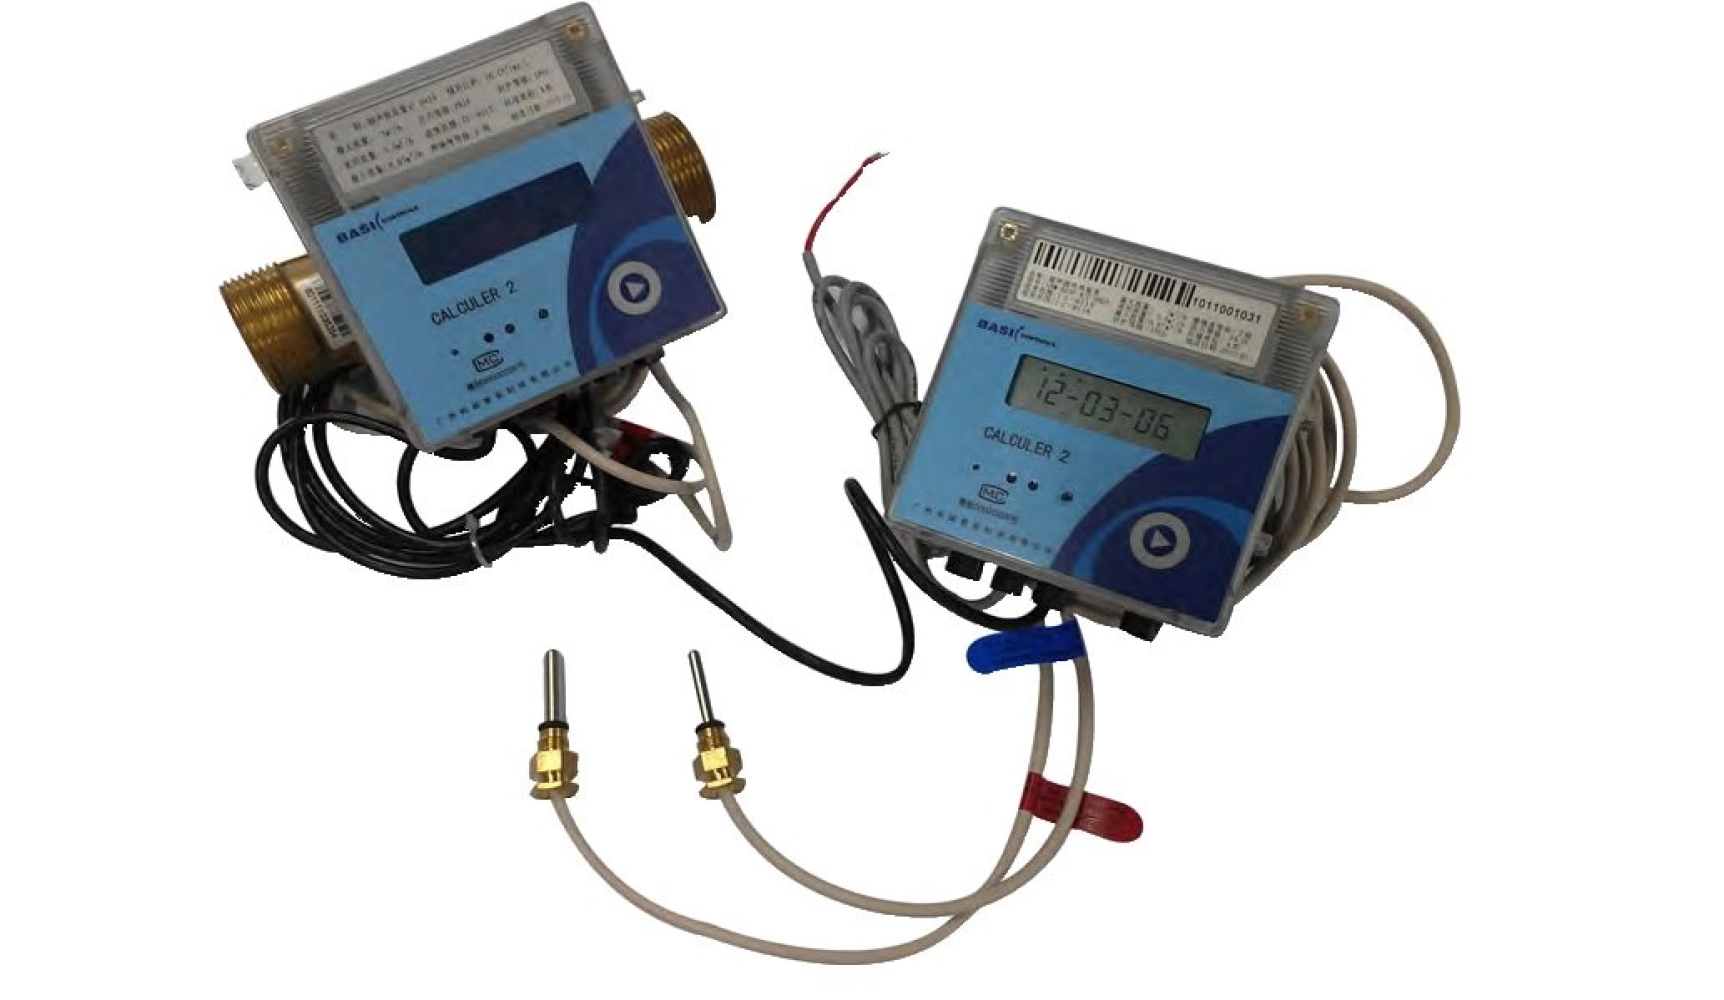 BASIC Control Ultrasonic BTU Meter